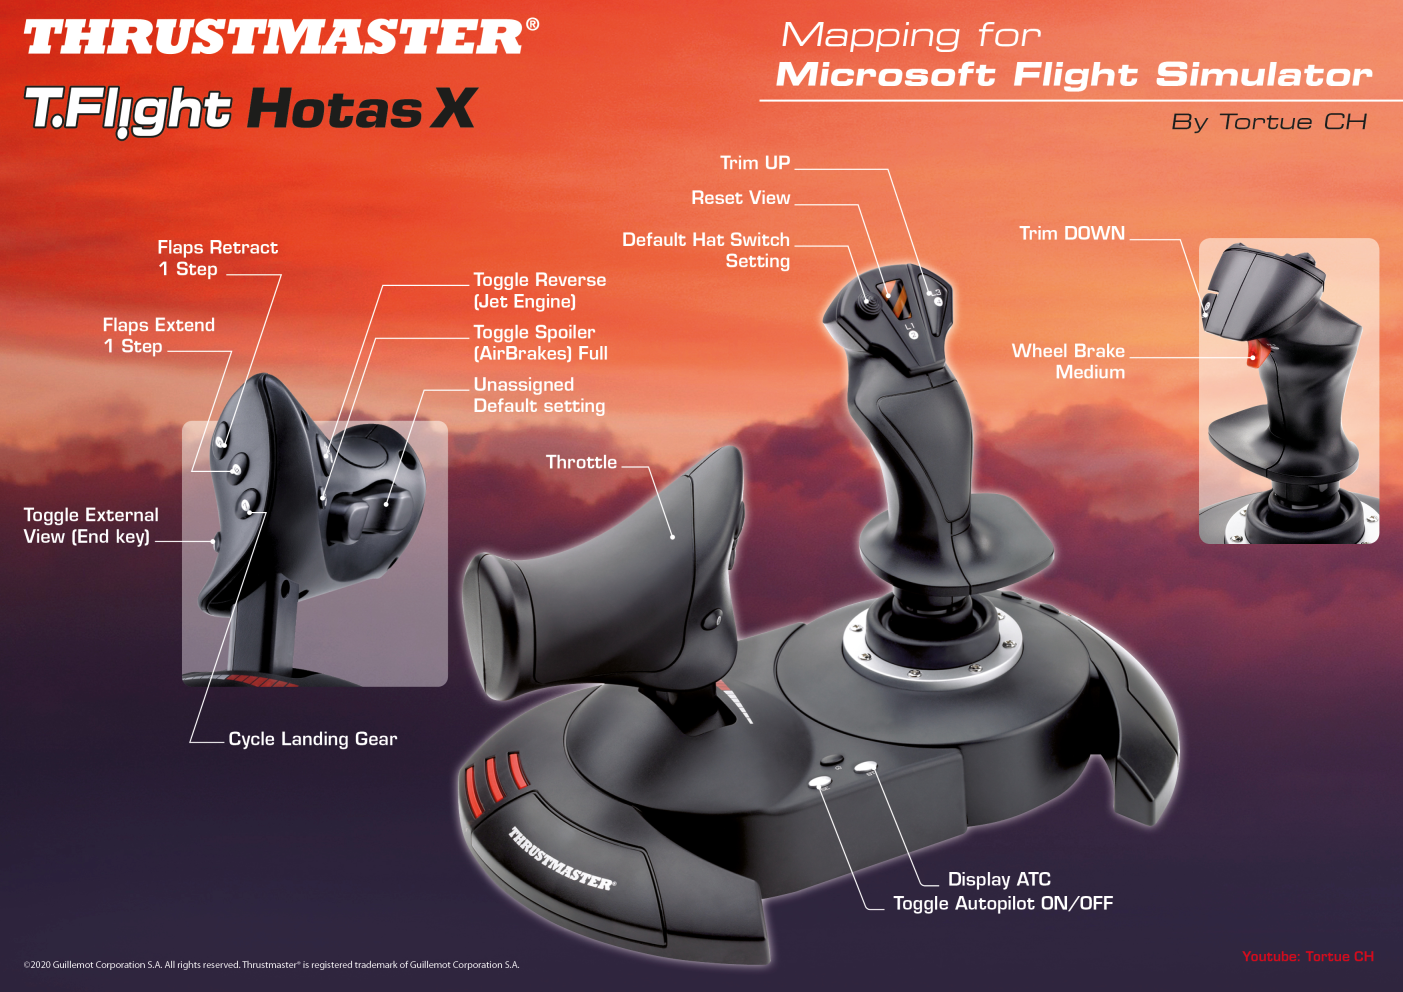 Thrustmaster T-Flight Hotas X USB Flight Stick Games controller 4160543 PC PS3 